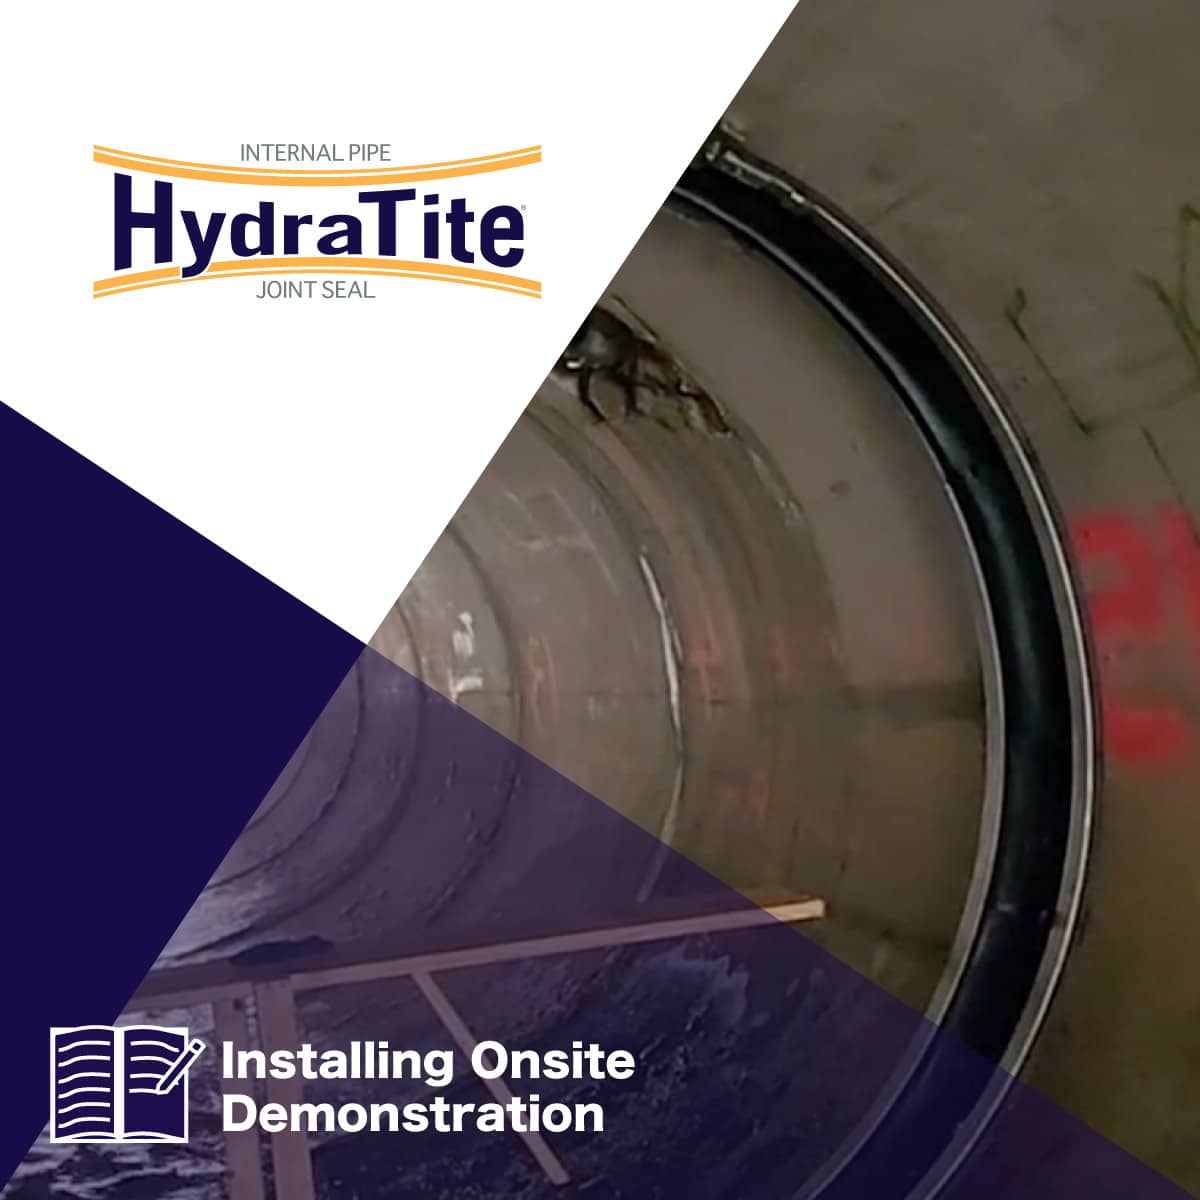 HydraTite installed in an elliptical culvert, 'Installing Onsite Demonstration'